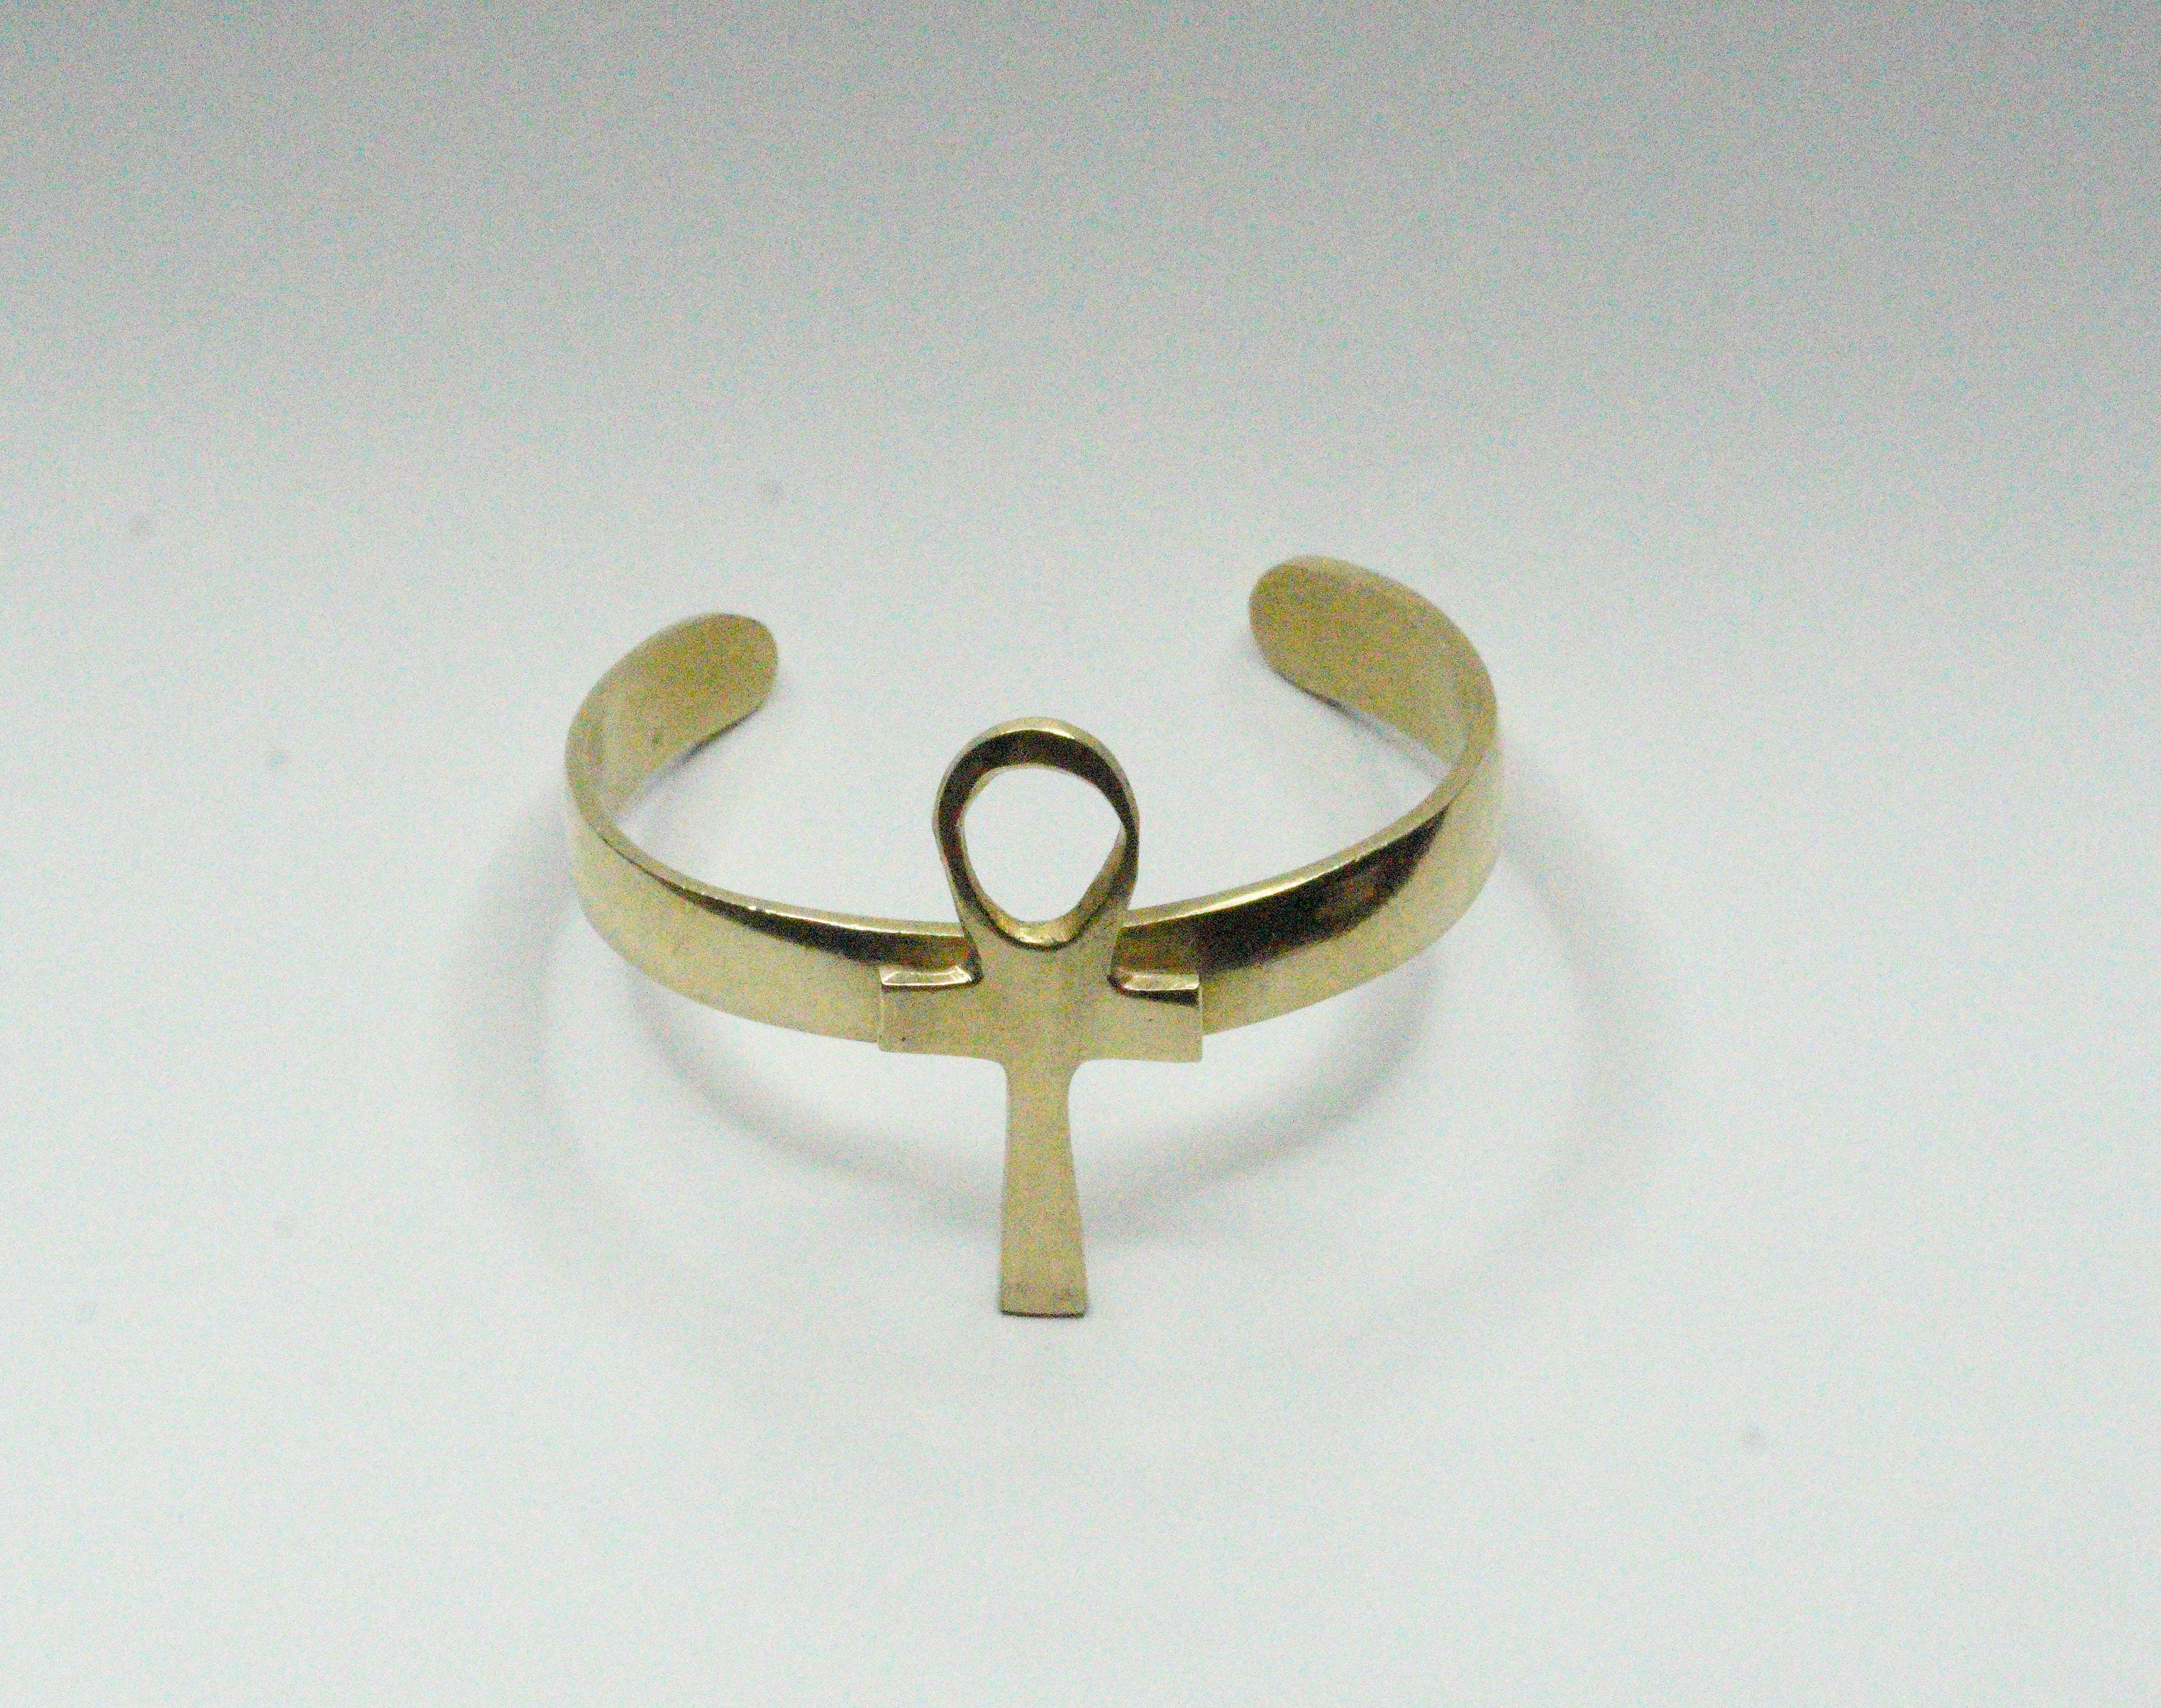  Handmade Bracelets - Brass / Handmade Bracelets / Handmade  Jewelry: Handmade Products